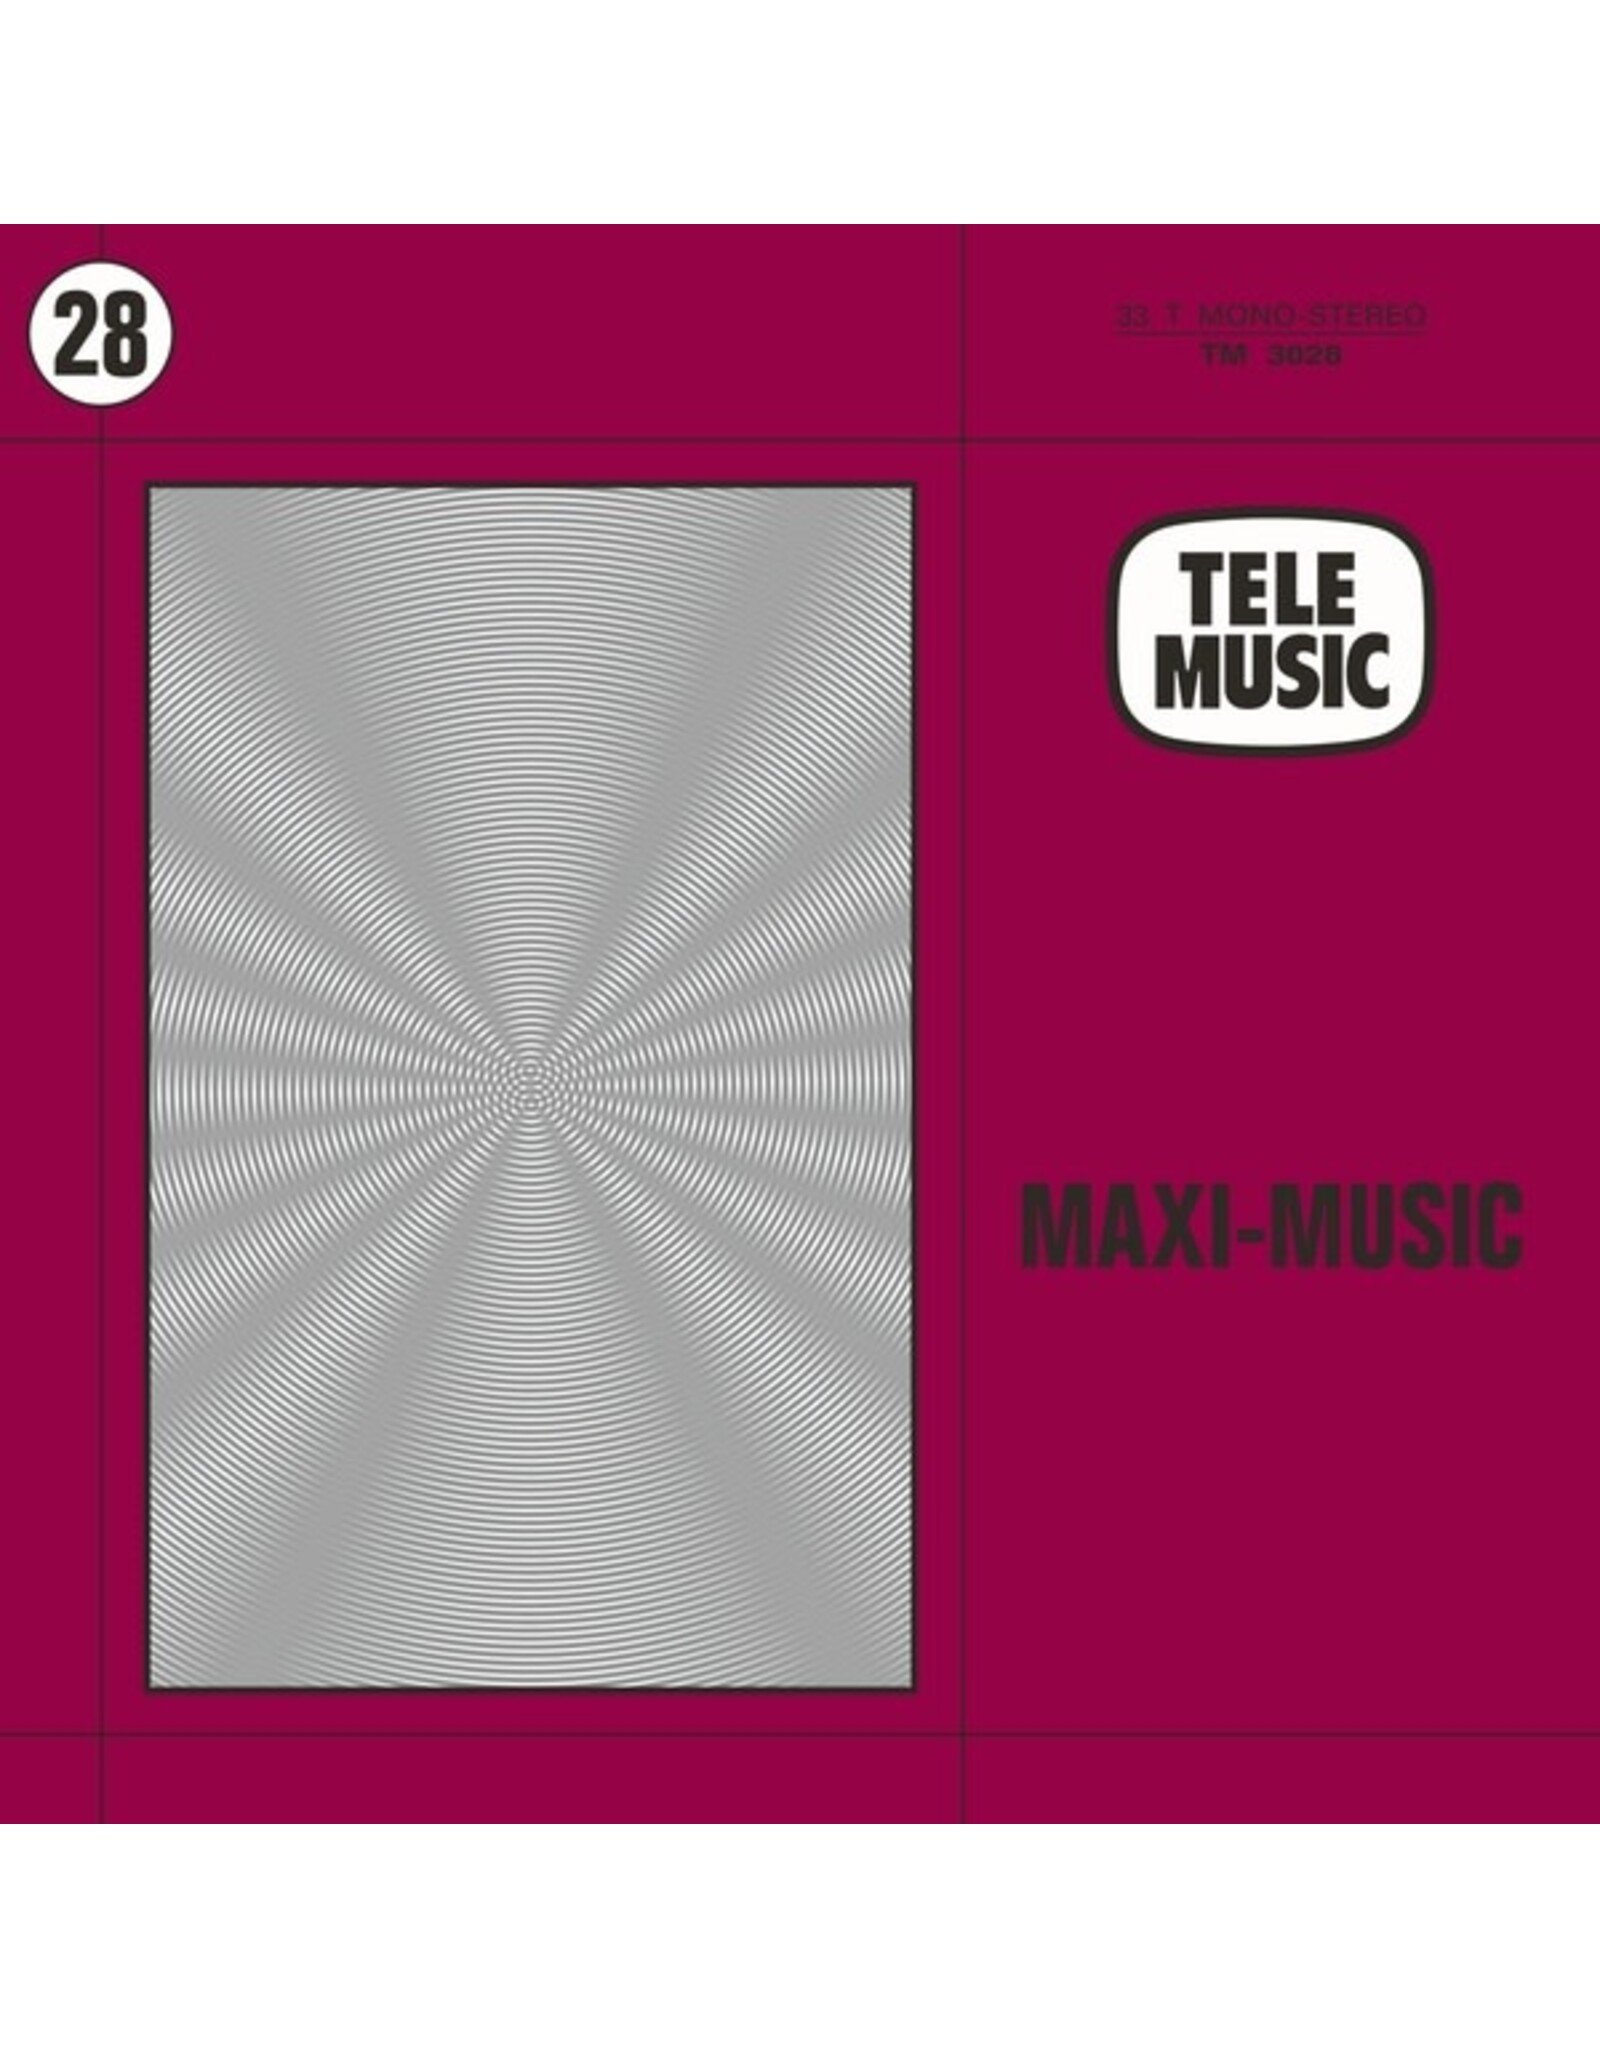 Be With Pedersen, Guy: Maxi-Music LP